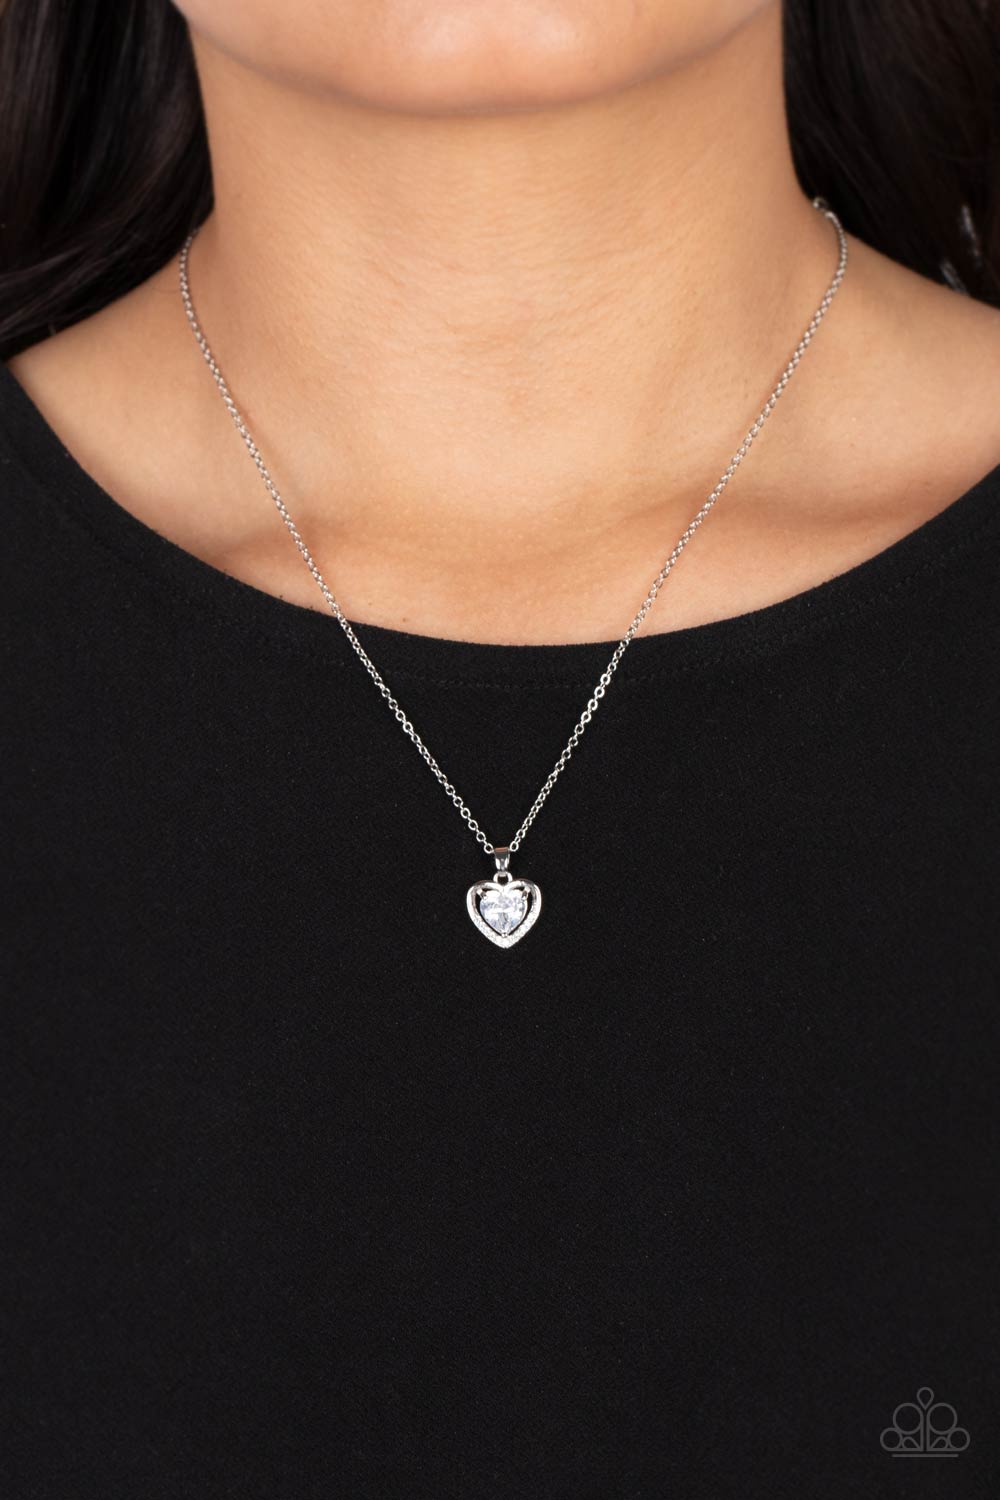 Effulgently Engaged White Rhinestone Heart Necklace - Paparazzi Accessories-on model - CarasShop.com - $5 Jewelry by Cara Jewels